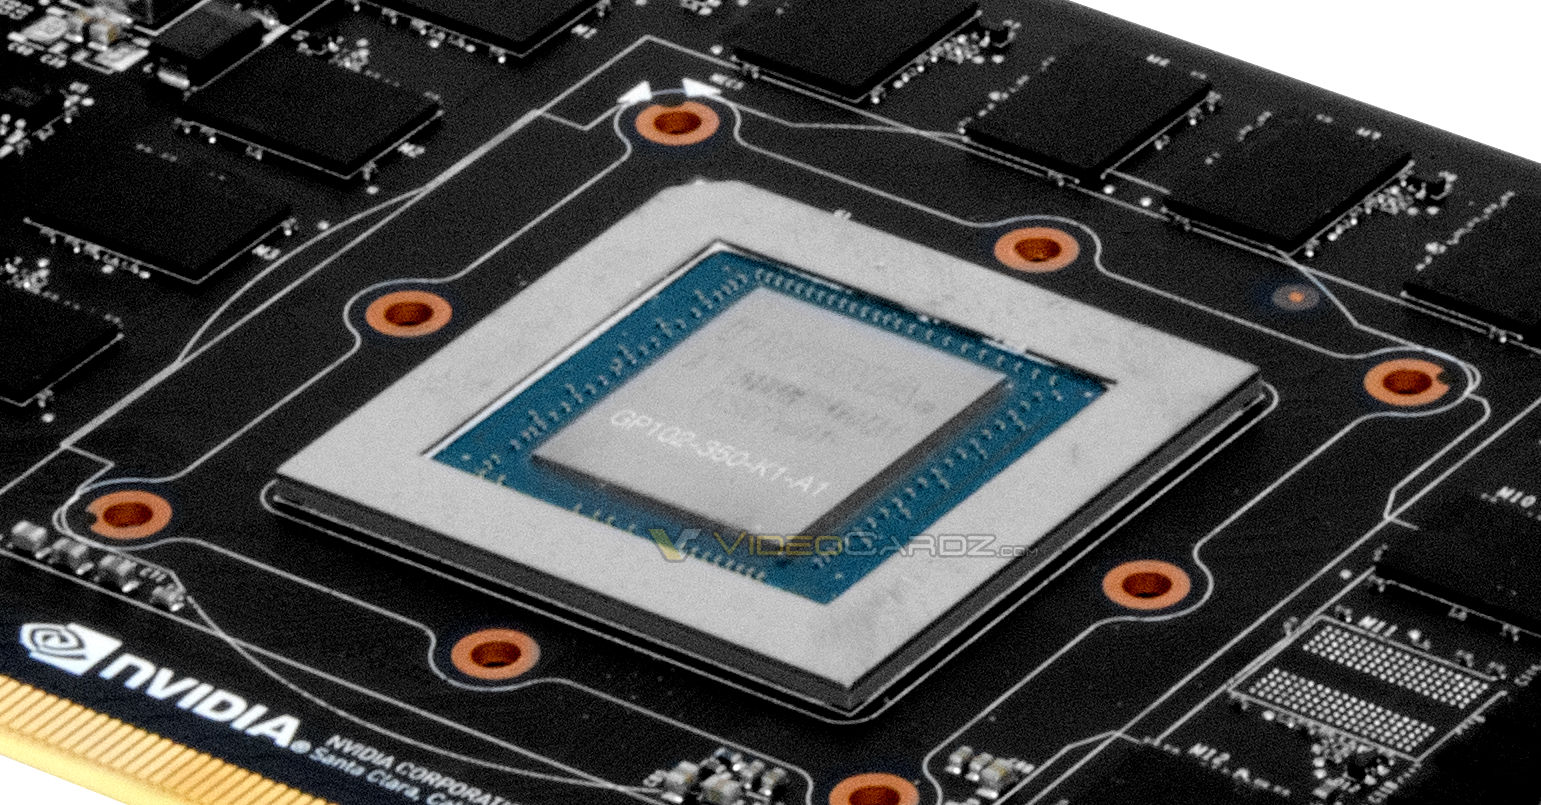 NVIDIA GeForce GTX 1080 Ti features GP102-350 GPU | VideoCardz.com